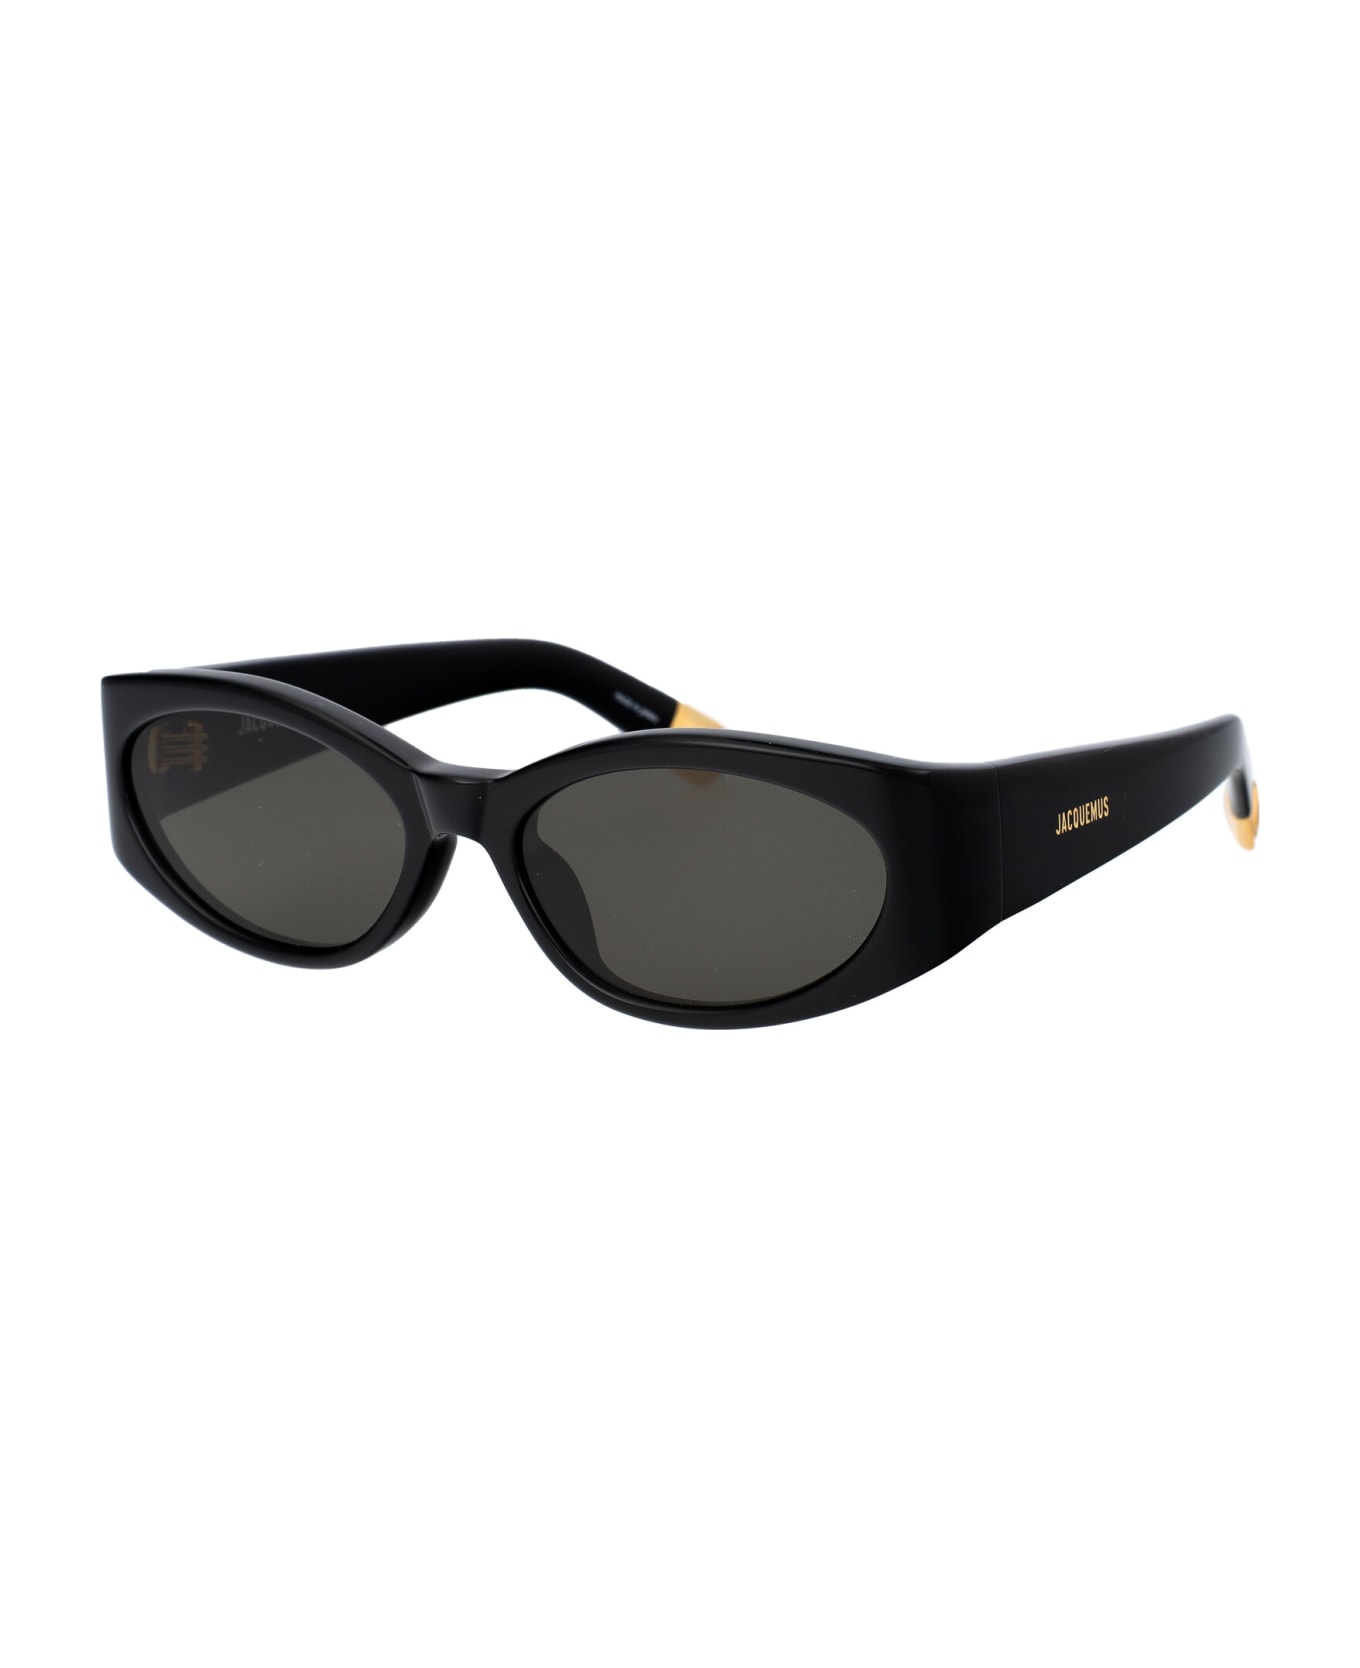 Jacquemus Ovalo Sunglasses - 01 BLACK/ YELLOW GOLD/ GREY